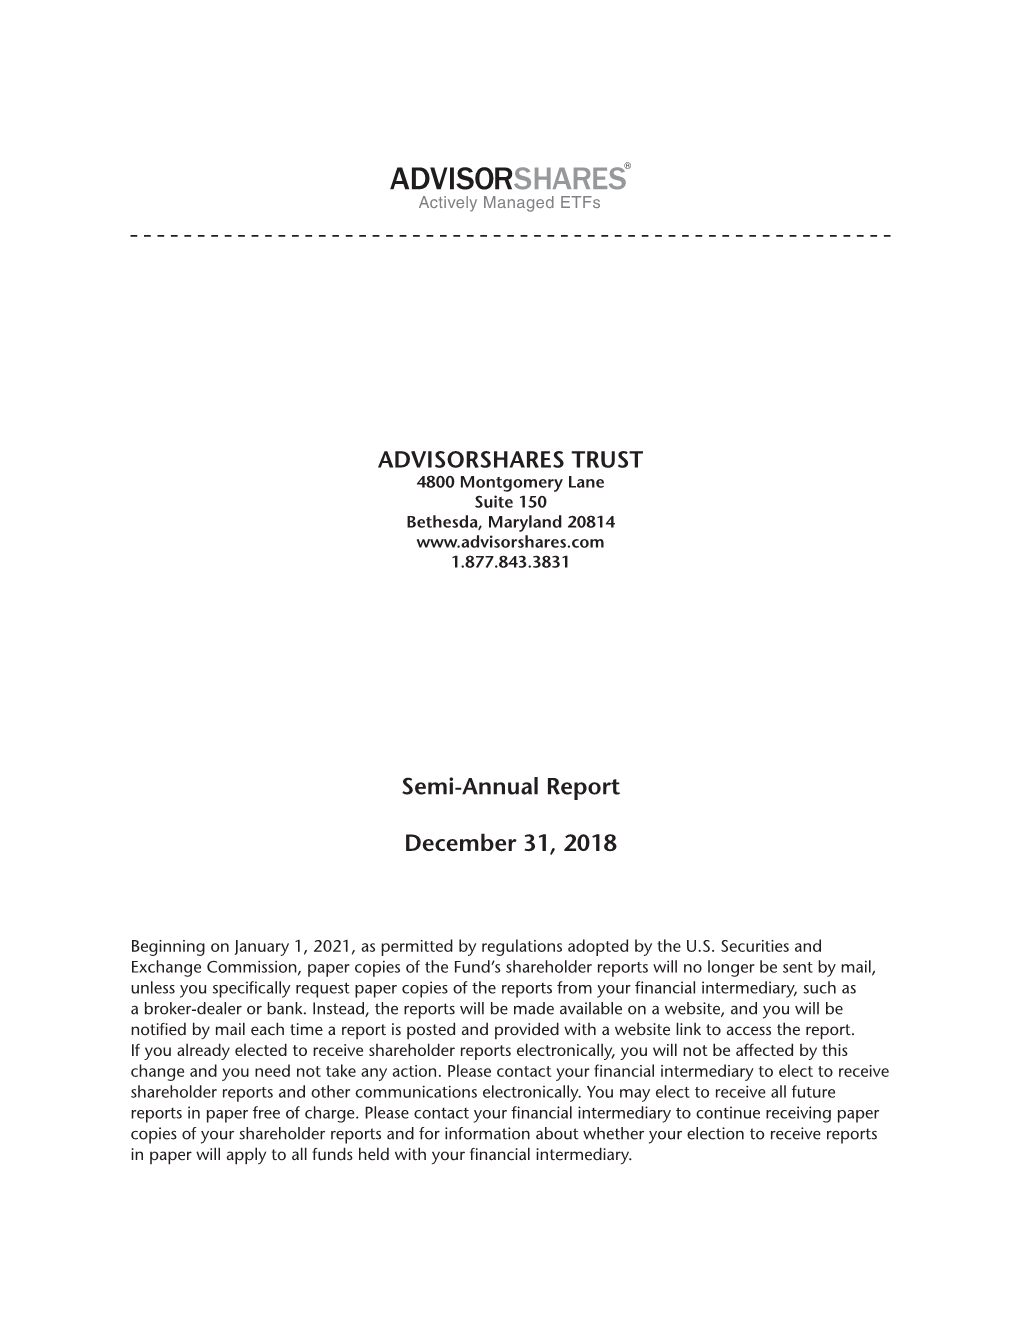 Semi-Annual Report December 31, 2018